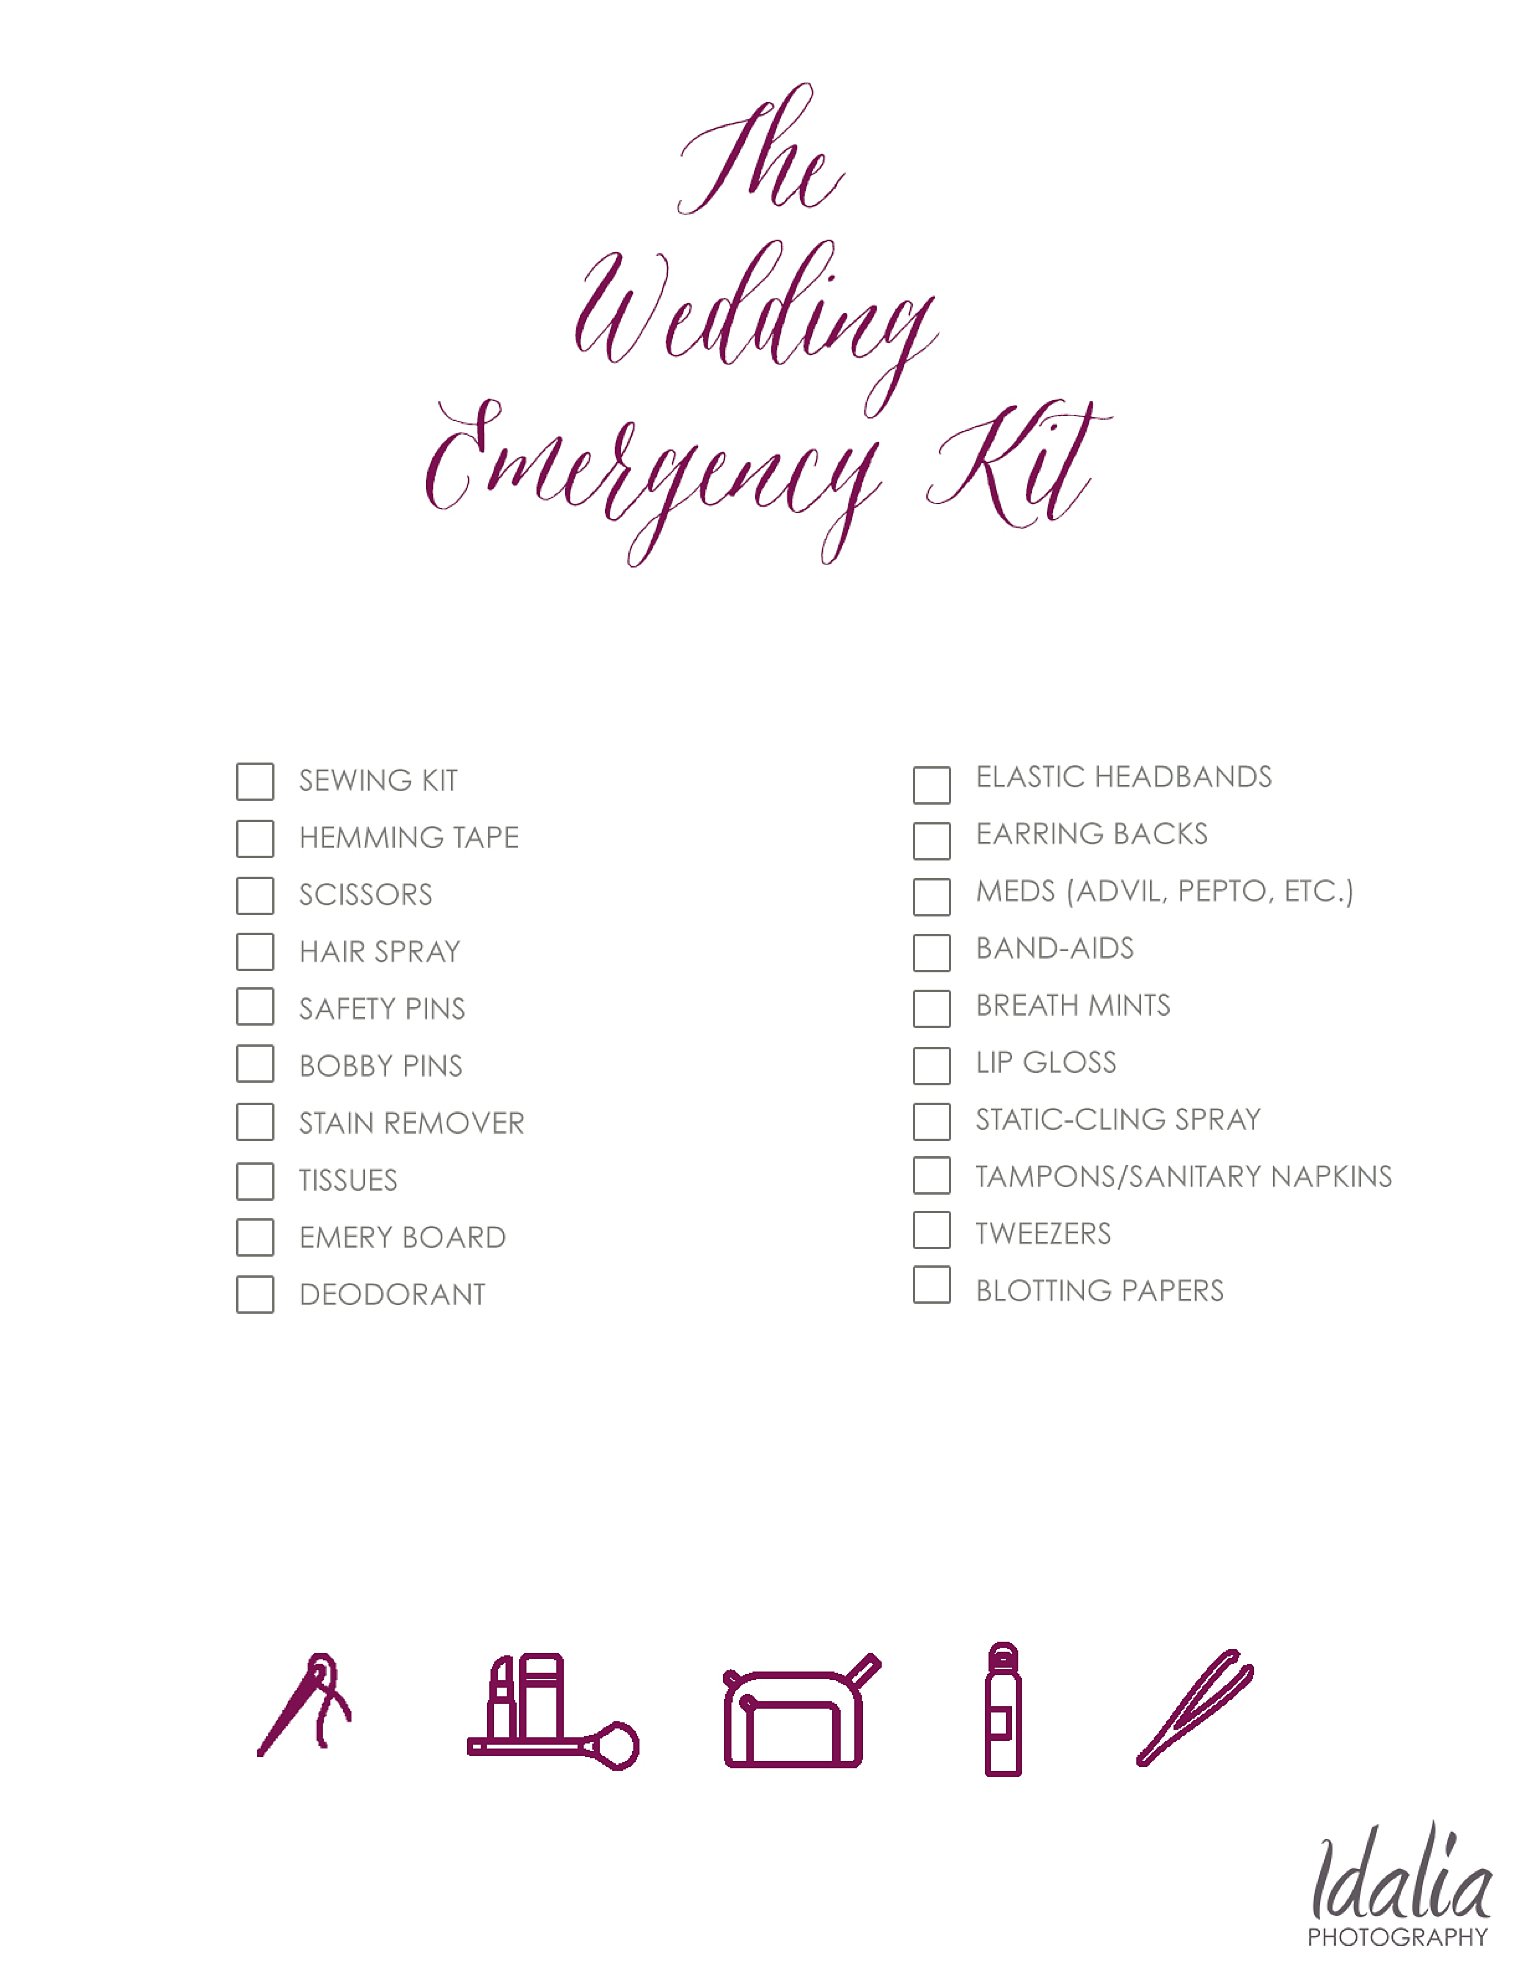 BLANK Wedding Day Mini Emergency Kit